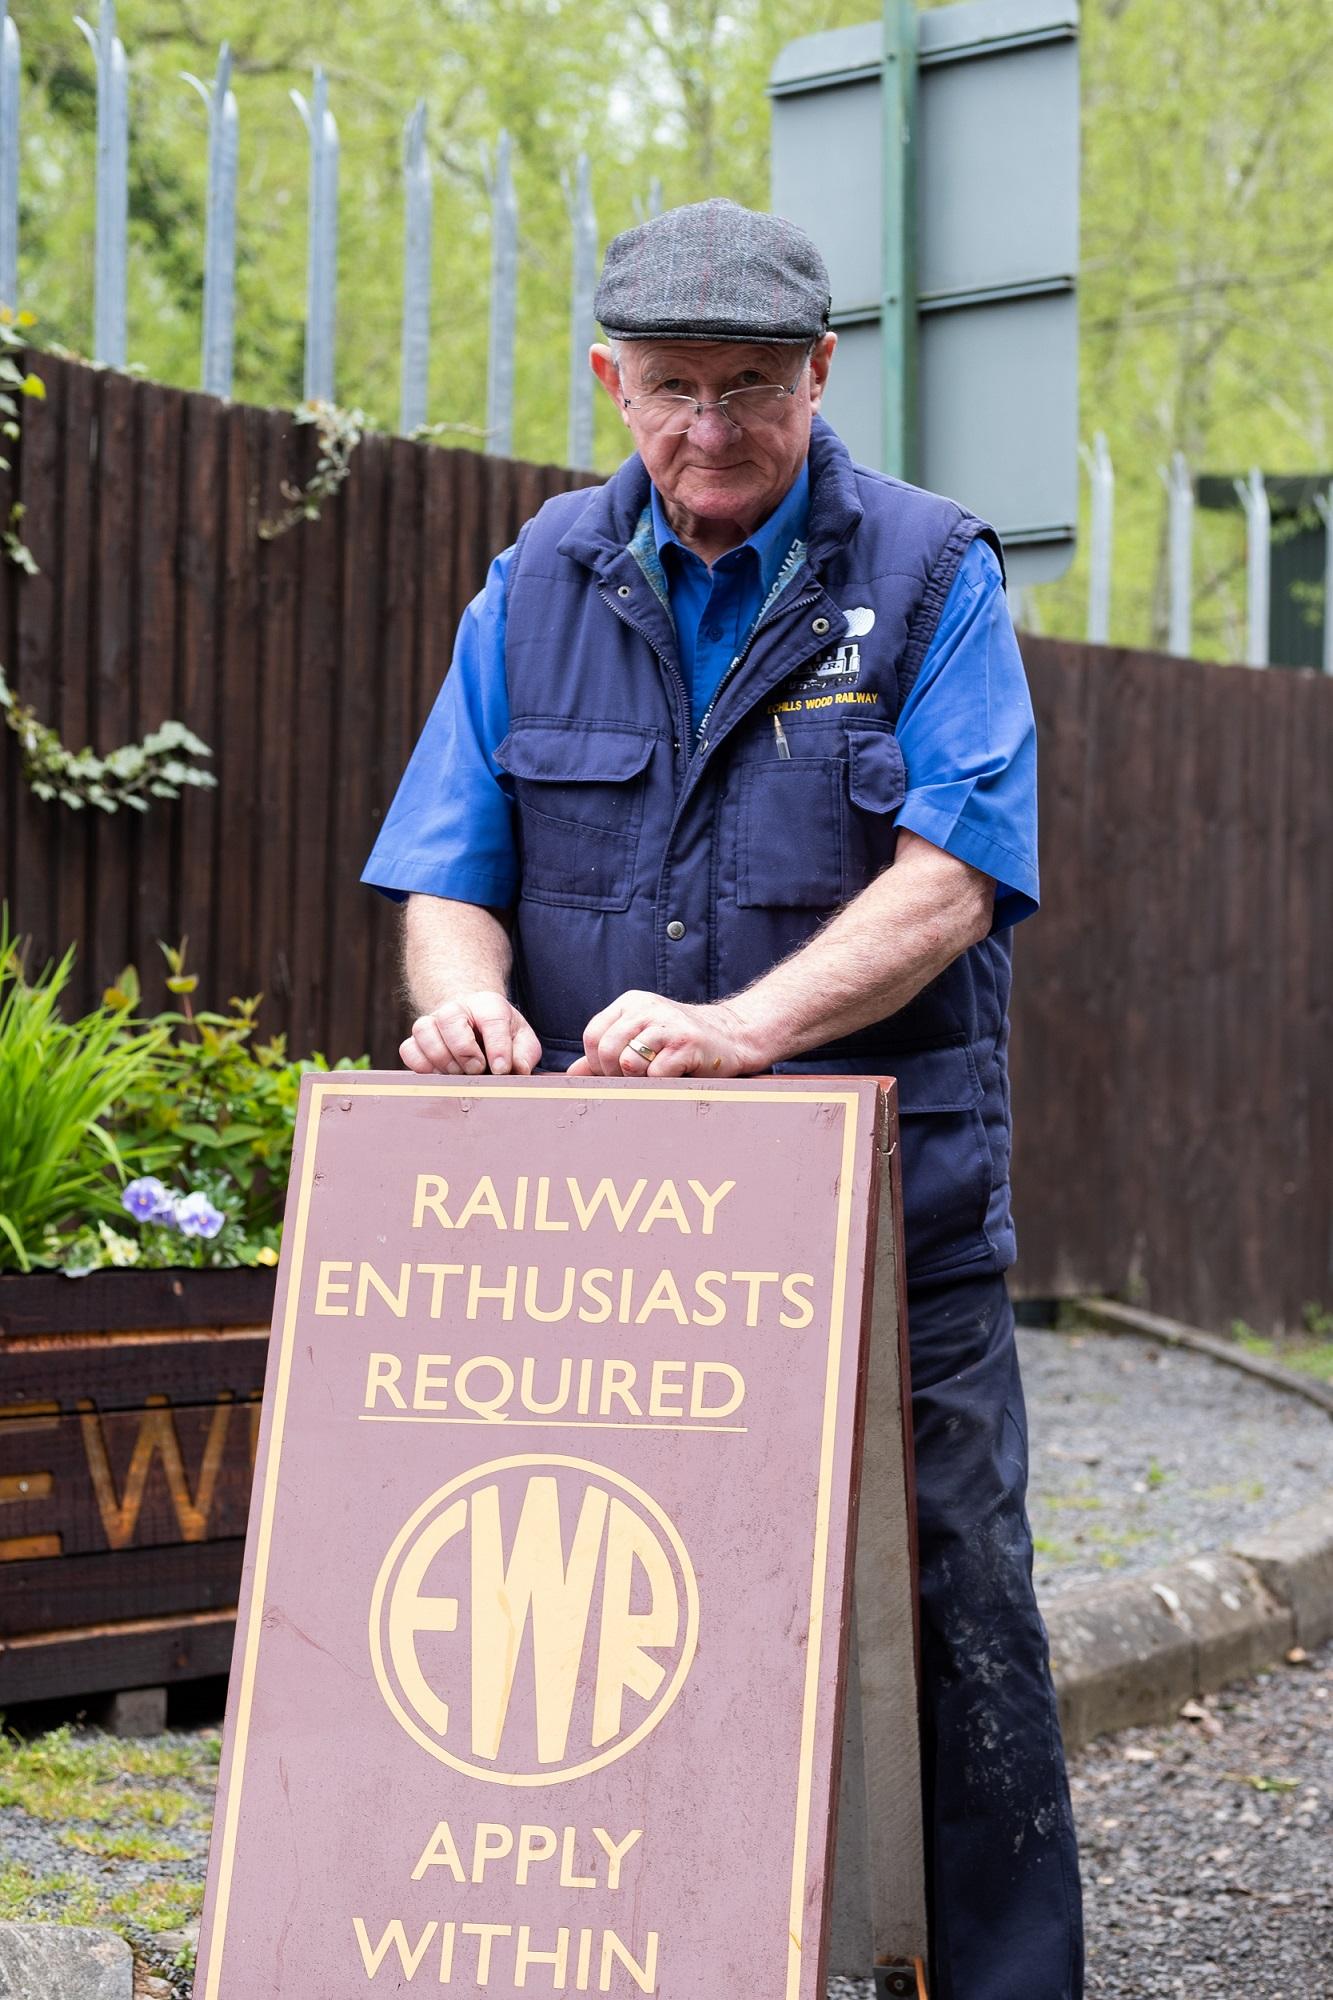 Photograph of Jeff Stevens, Secretary of the Echills Wood Railway